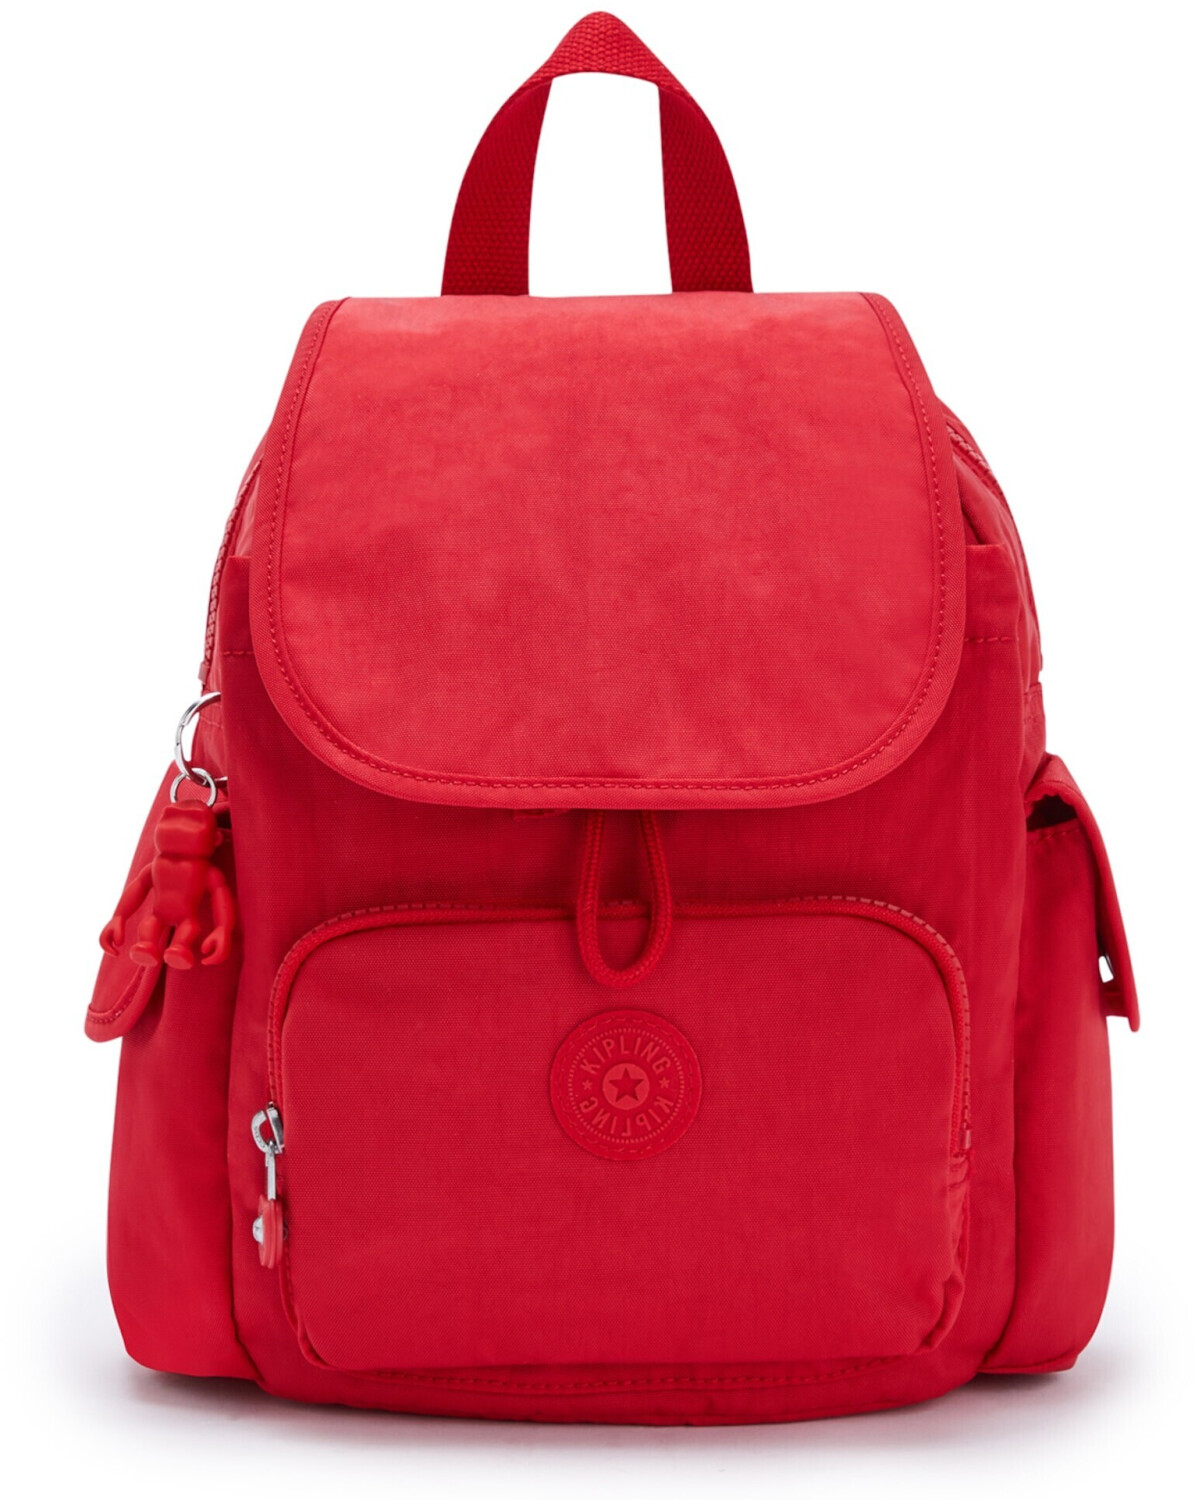 Photos - Backpack Kipling City Pack Mini red rouge 